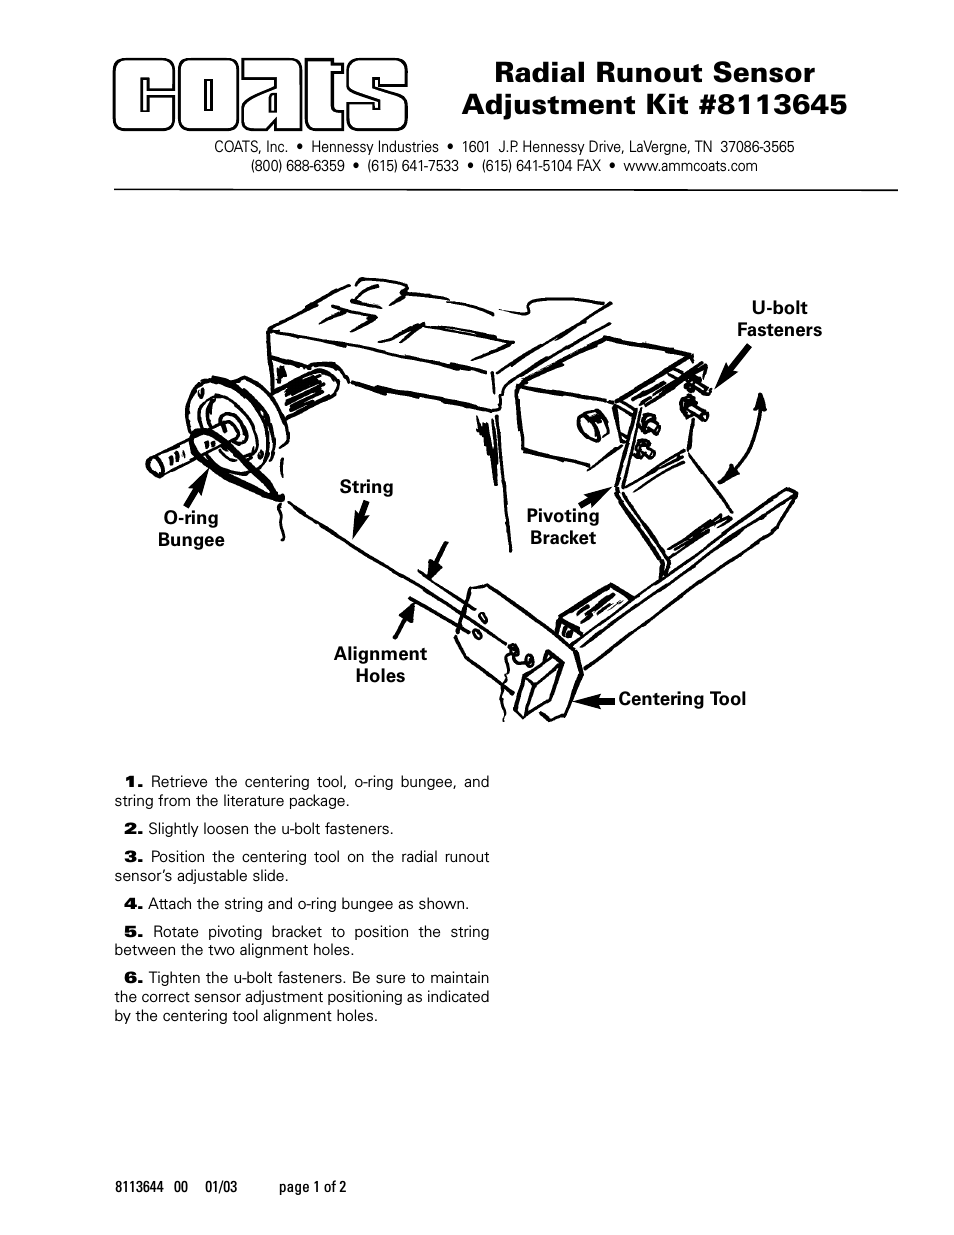 Kit 8113645 Radial Runout Sensor Adjustment Kit